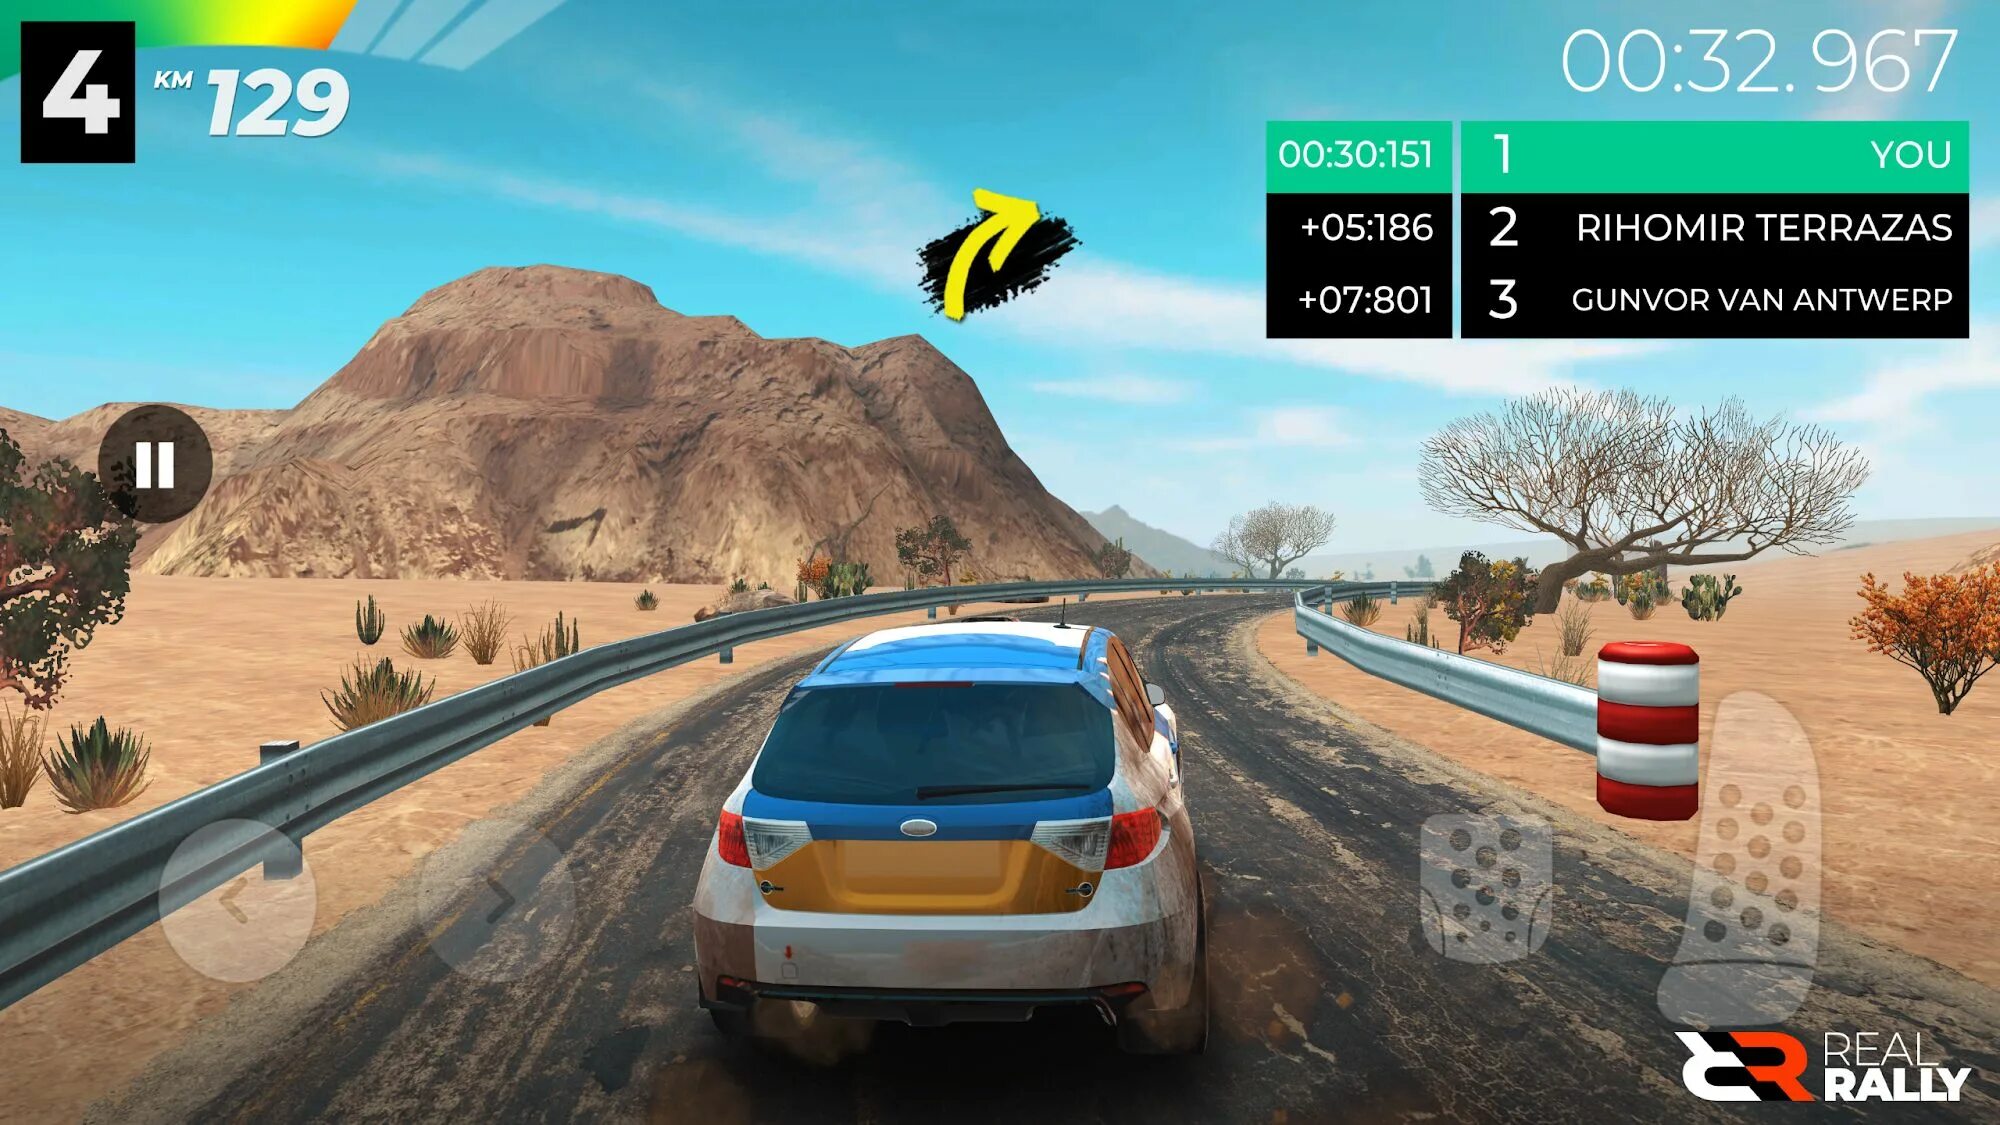 Бесплатная игра ралли. Real Rally. Ралли игра на андроид. Реалистичные гонки на андроид. Гонки с реалистичной графикой на андроид.